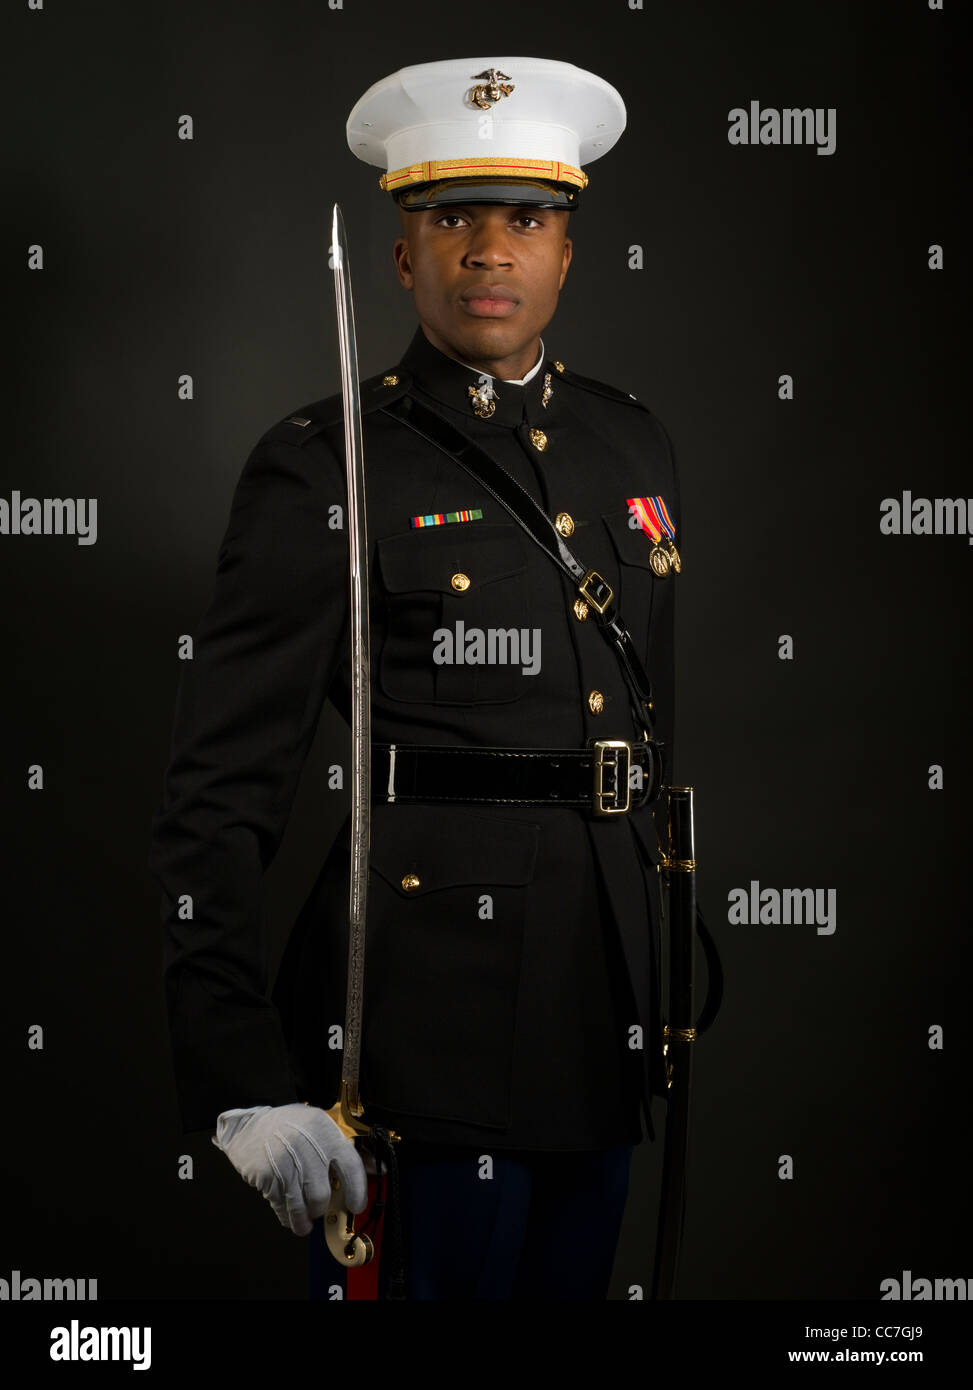 Marine Corps Dress Uniform